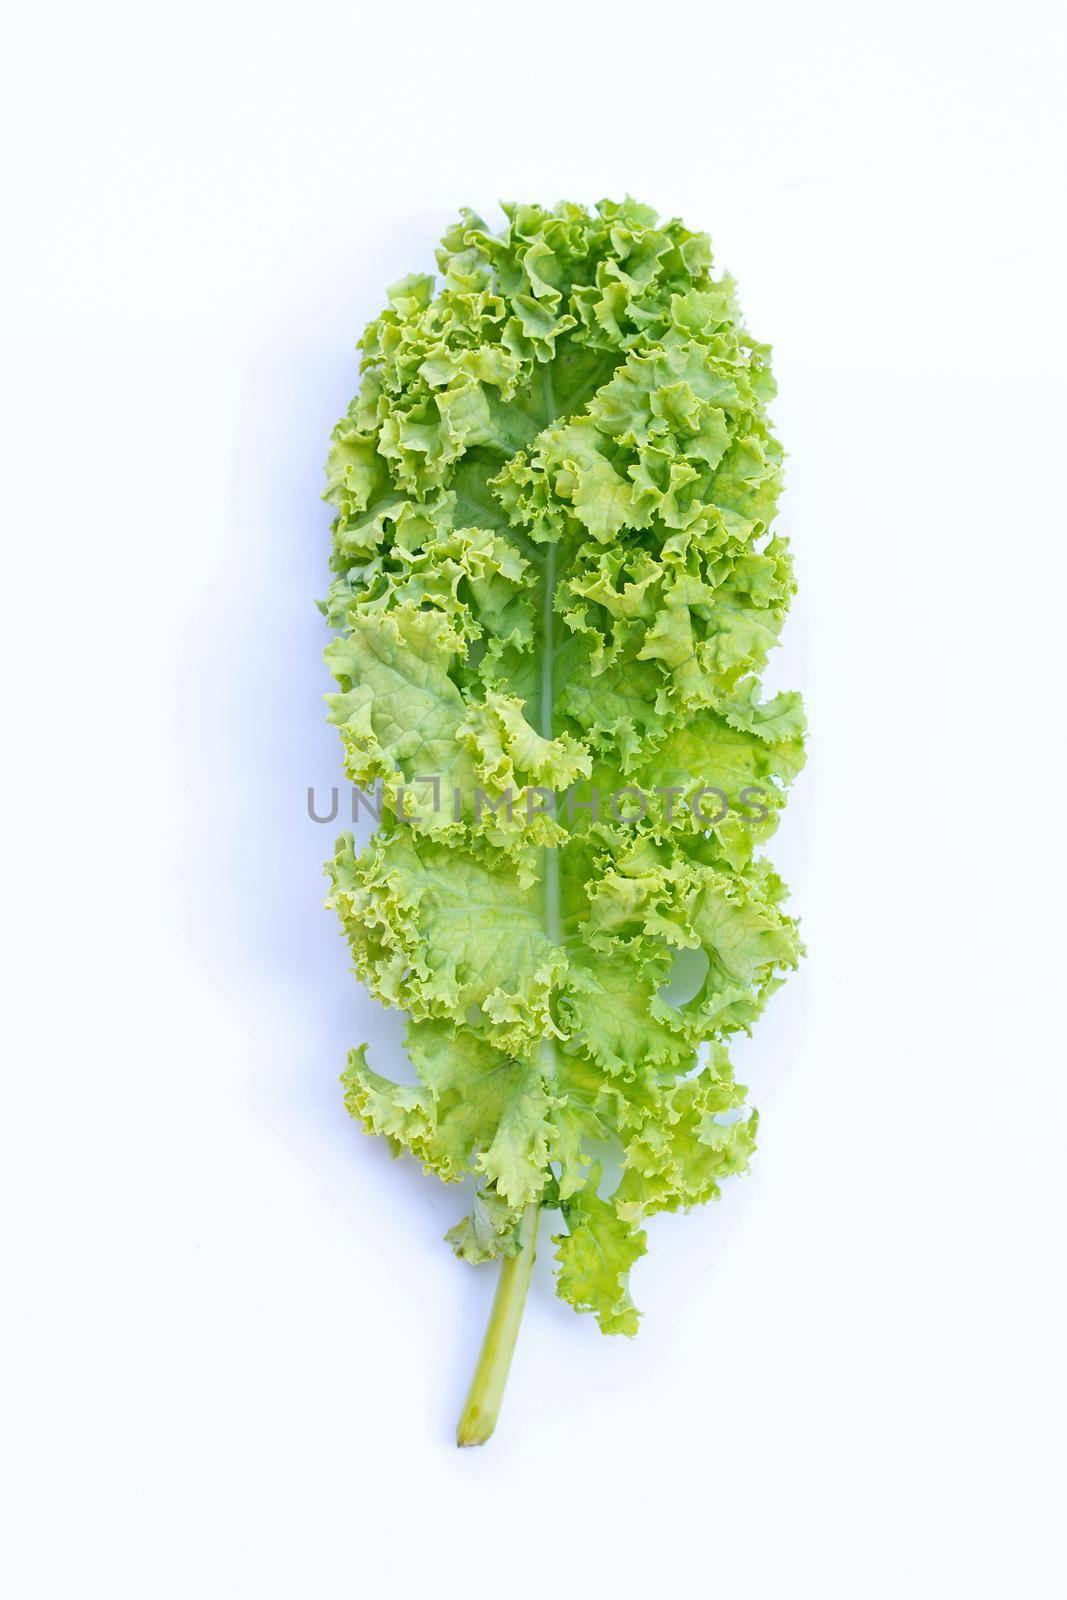 Fresh kale leaves salad vegetable on white background. by Bowonpat